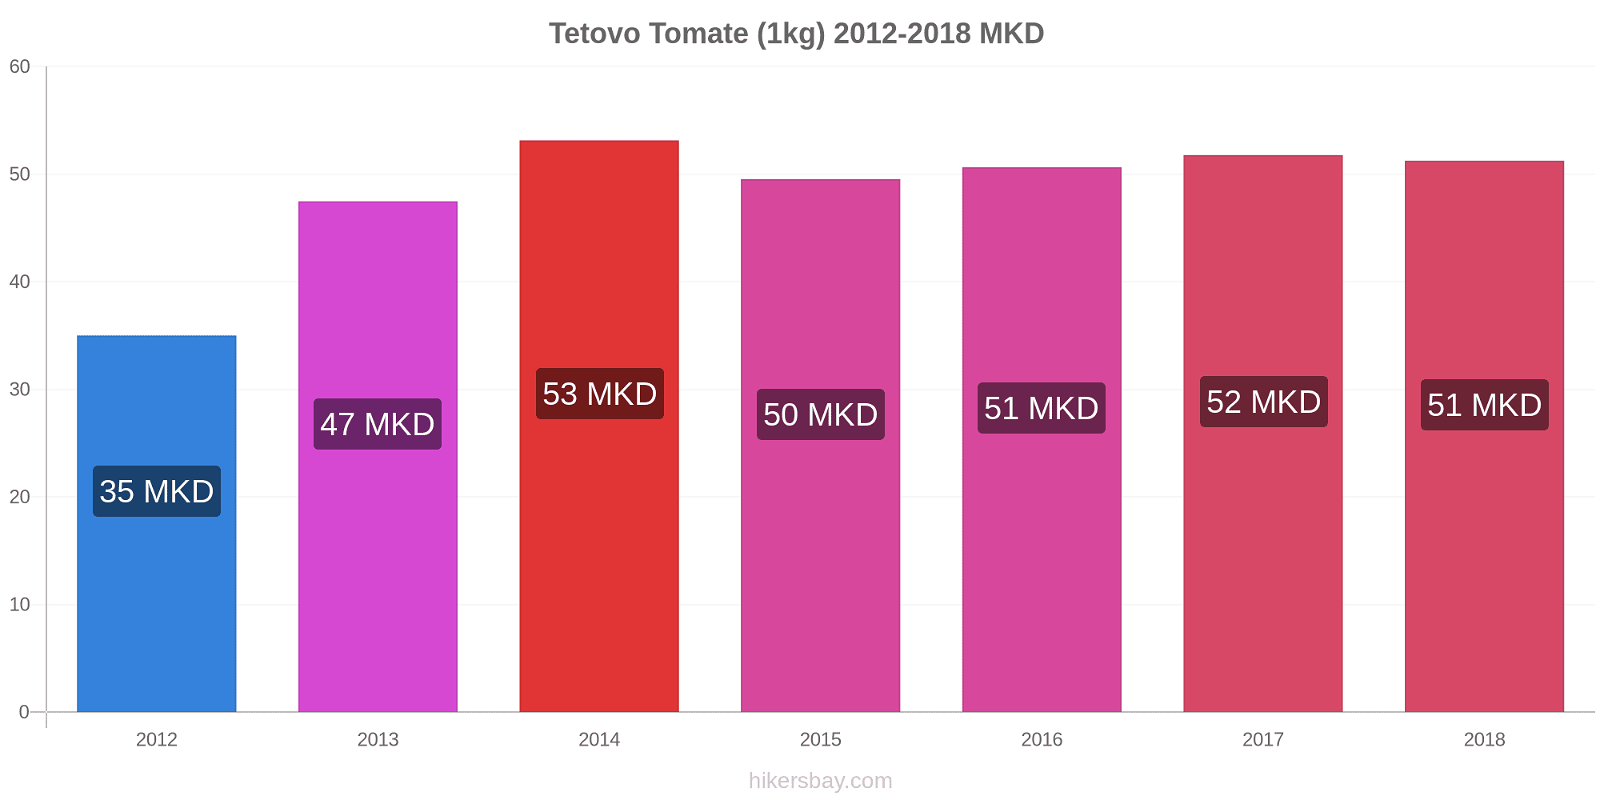 Tetovo modificări de preț Tomate (1kg) hikersbay.com